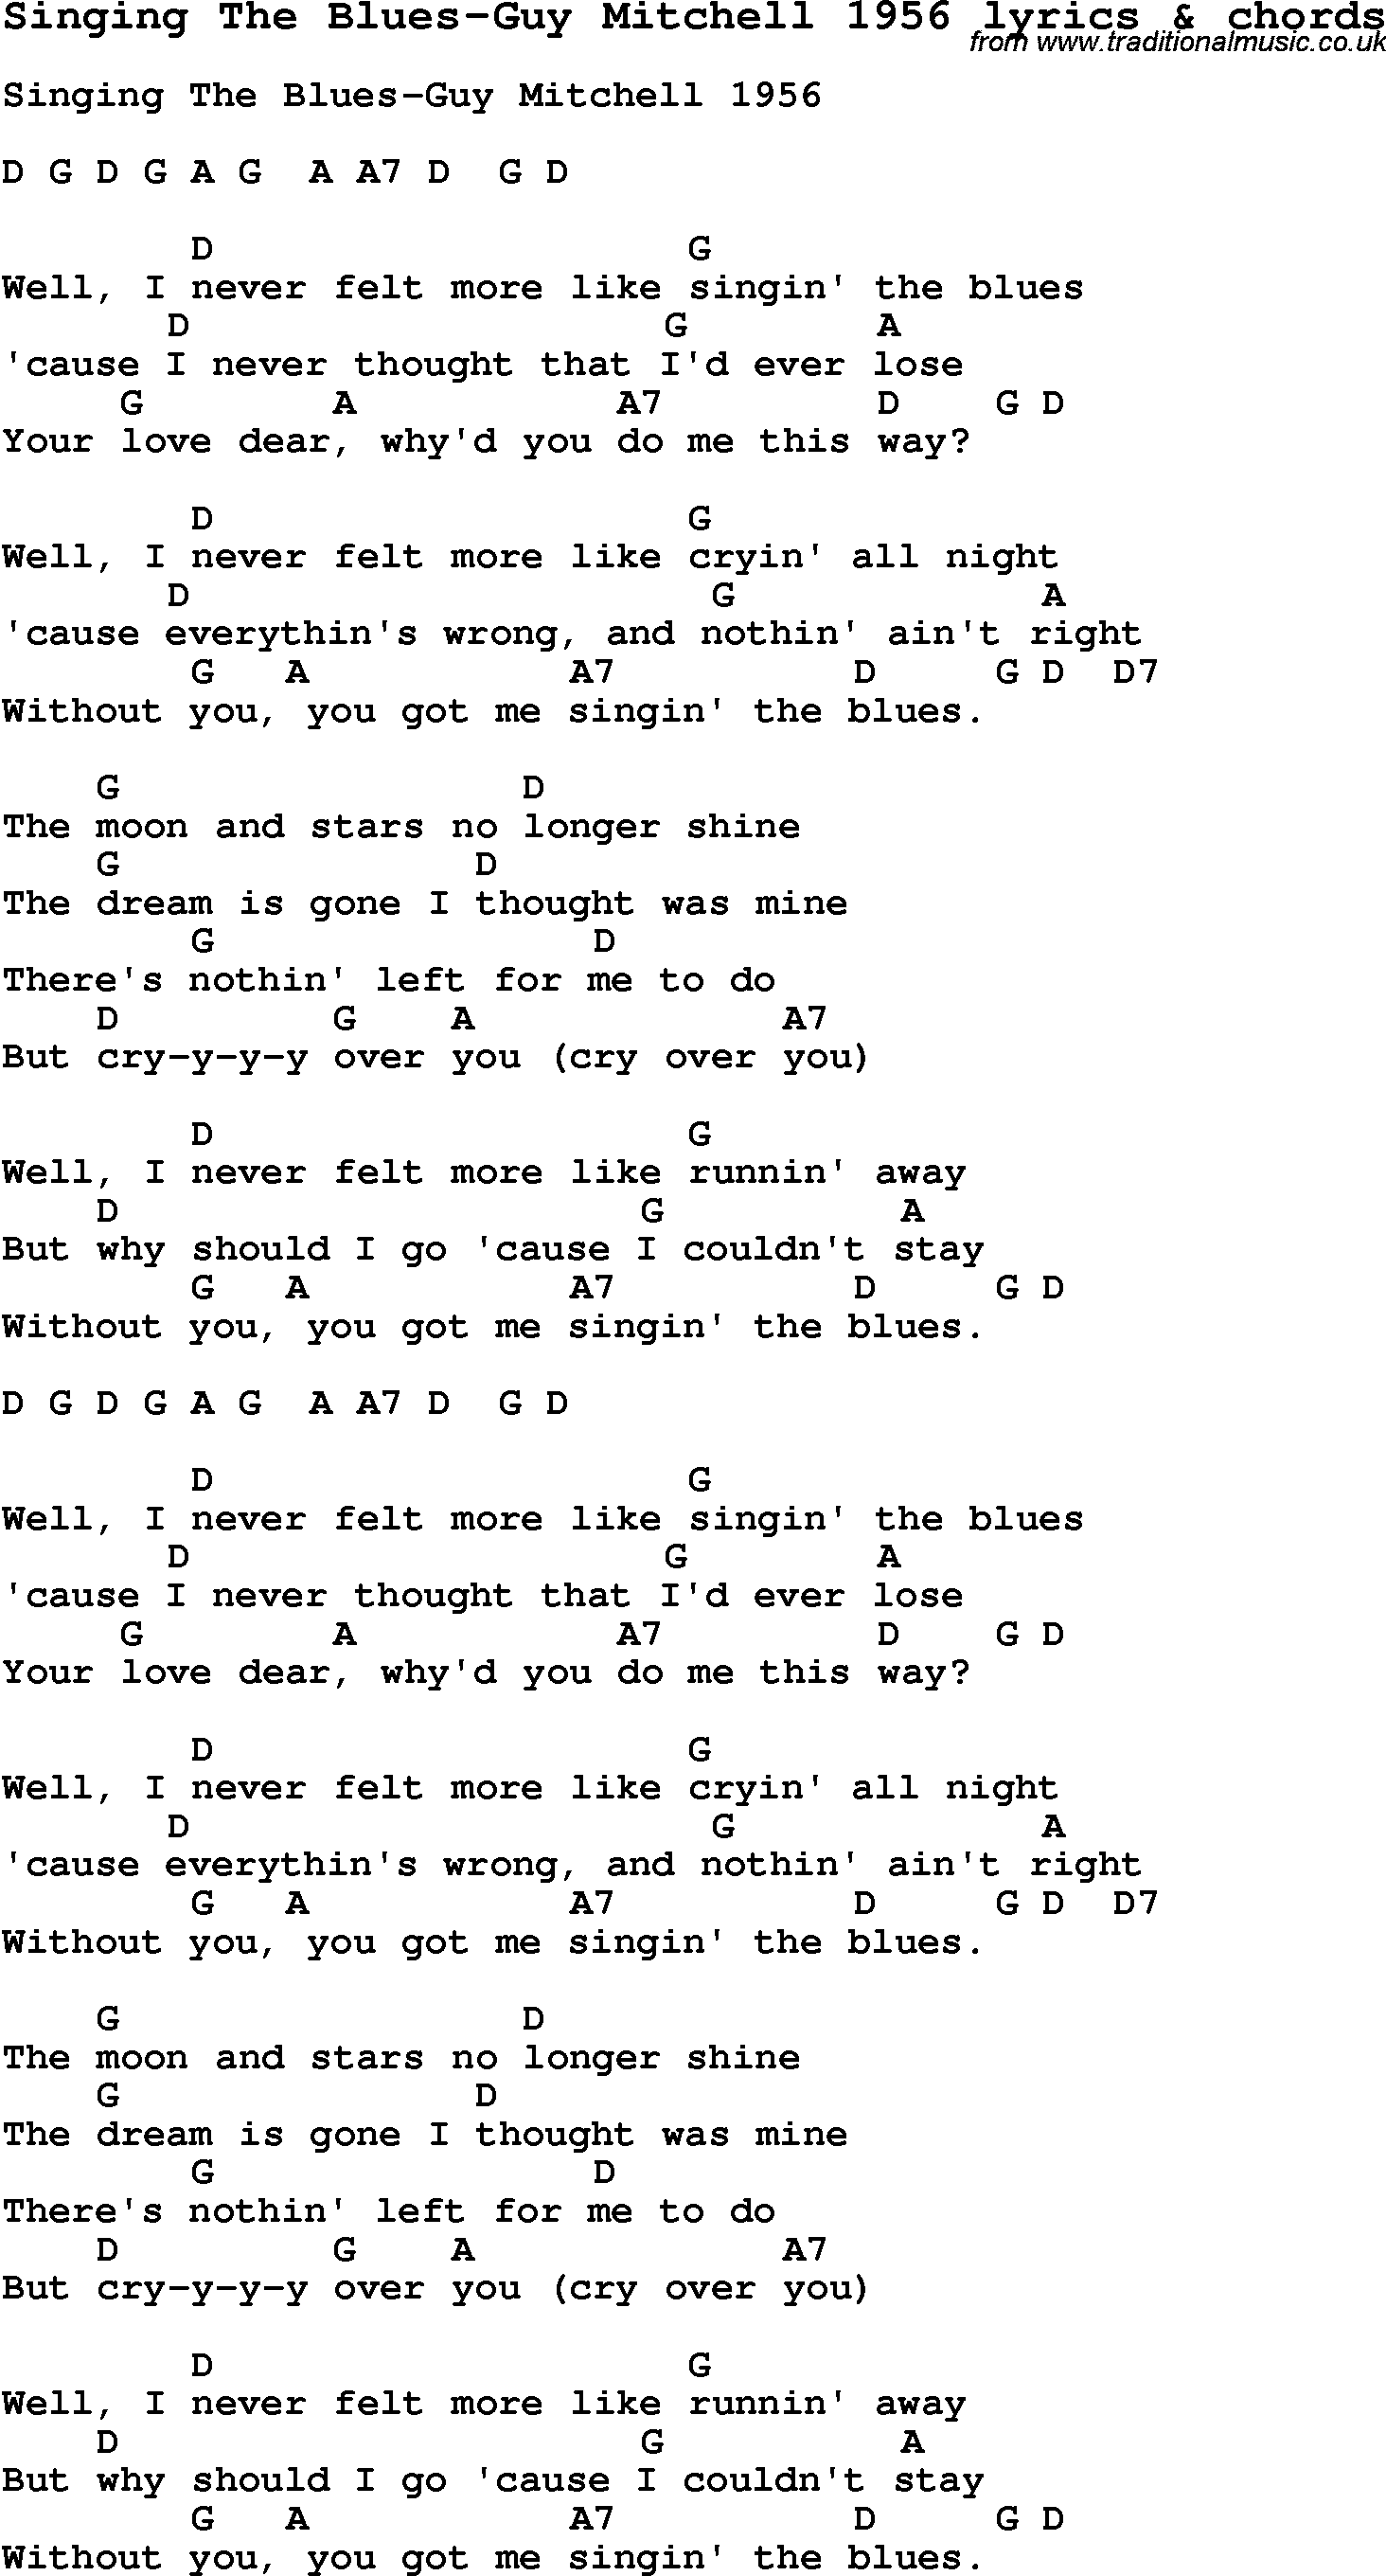 Love Song Lyrics for: Singing The Blues-Guy Mitchell 1956 with chords for Ukulele, Guitar Banjo etc.